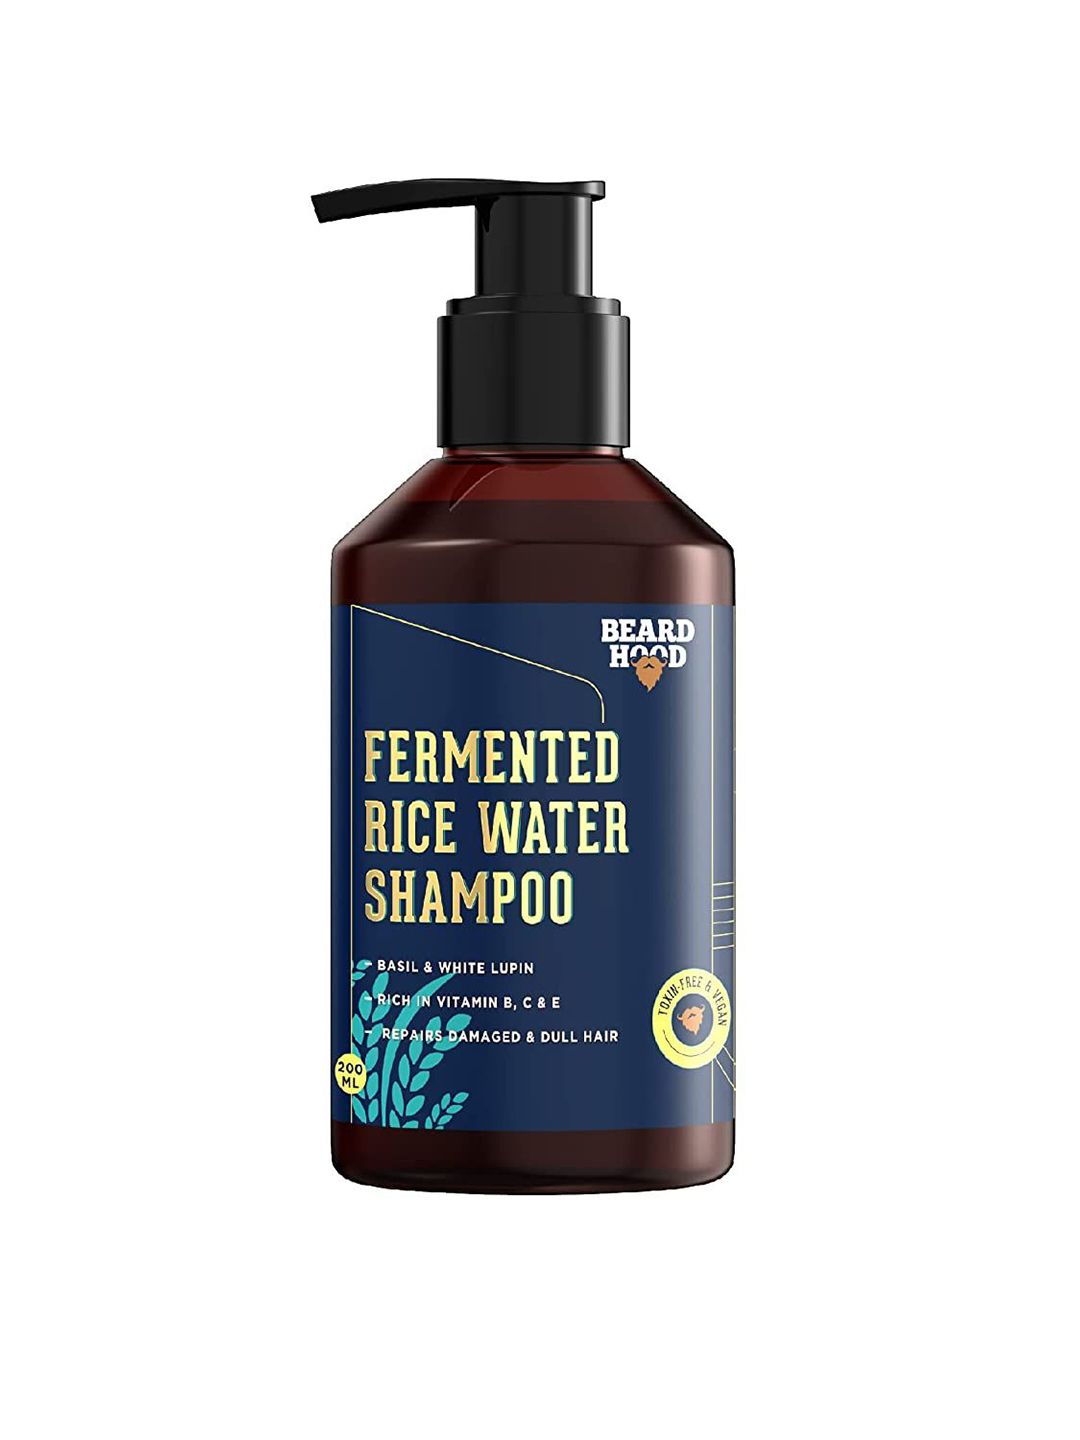 Beardhood Fermented Rice Water Shampoo 200ml Price in India